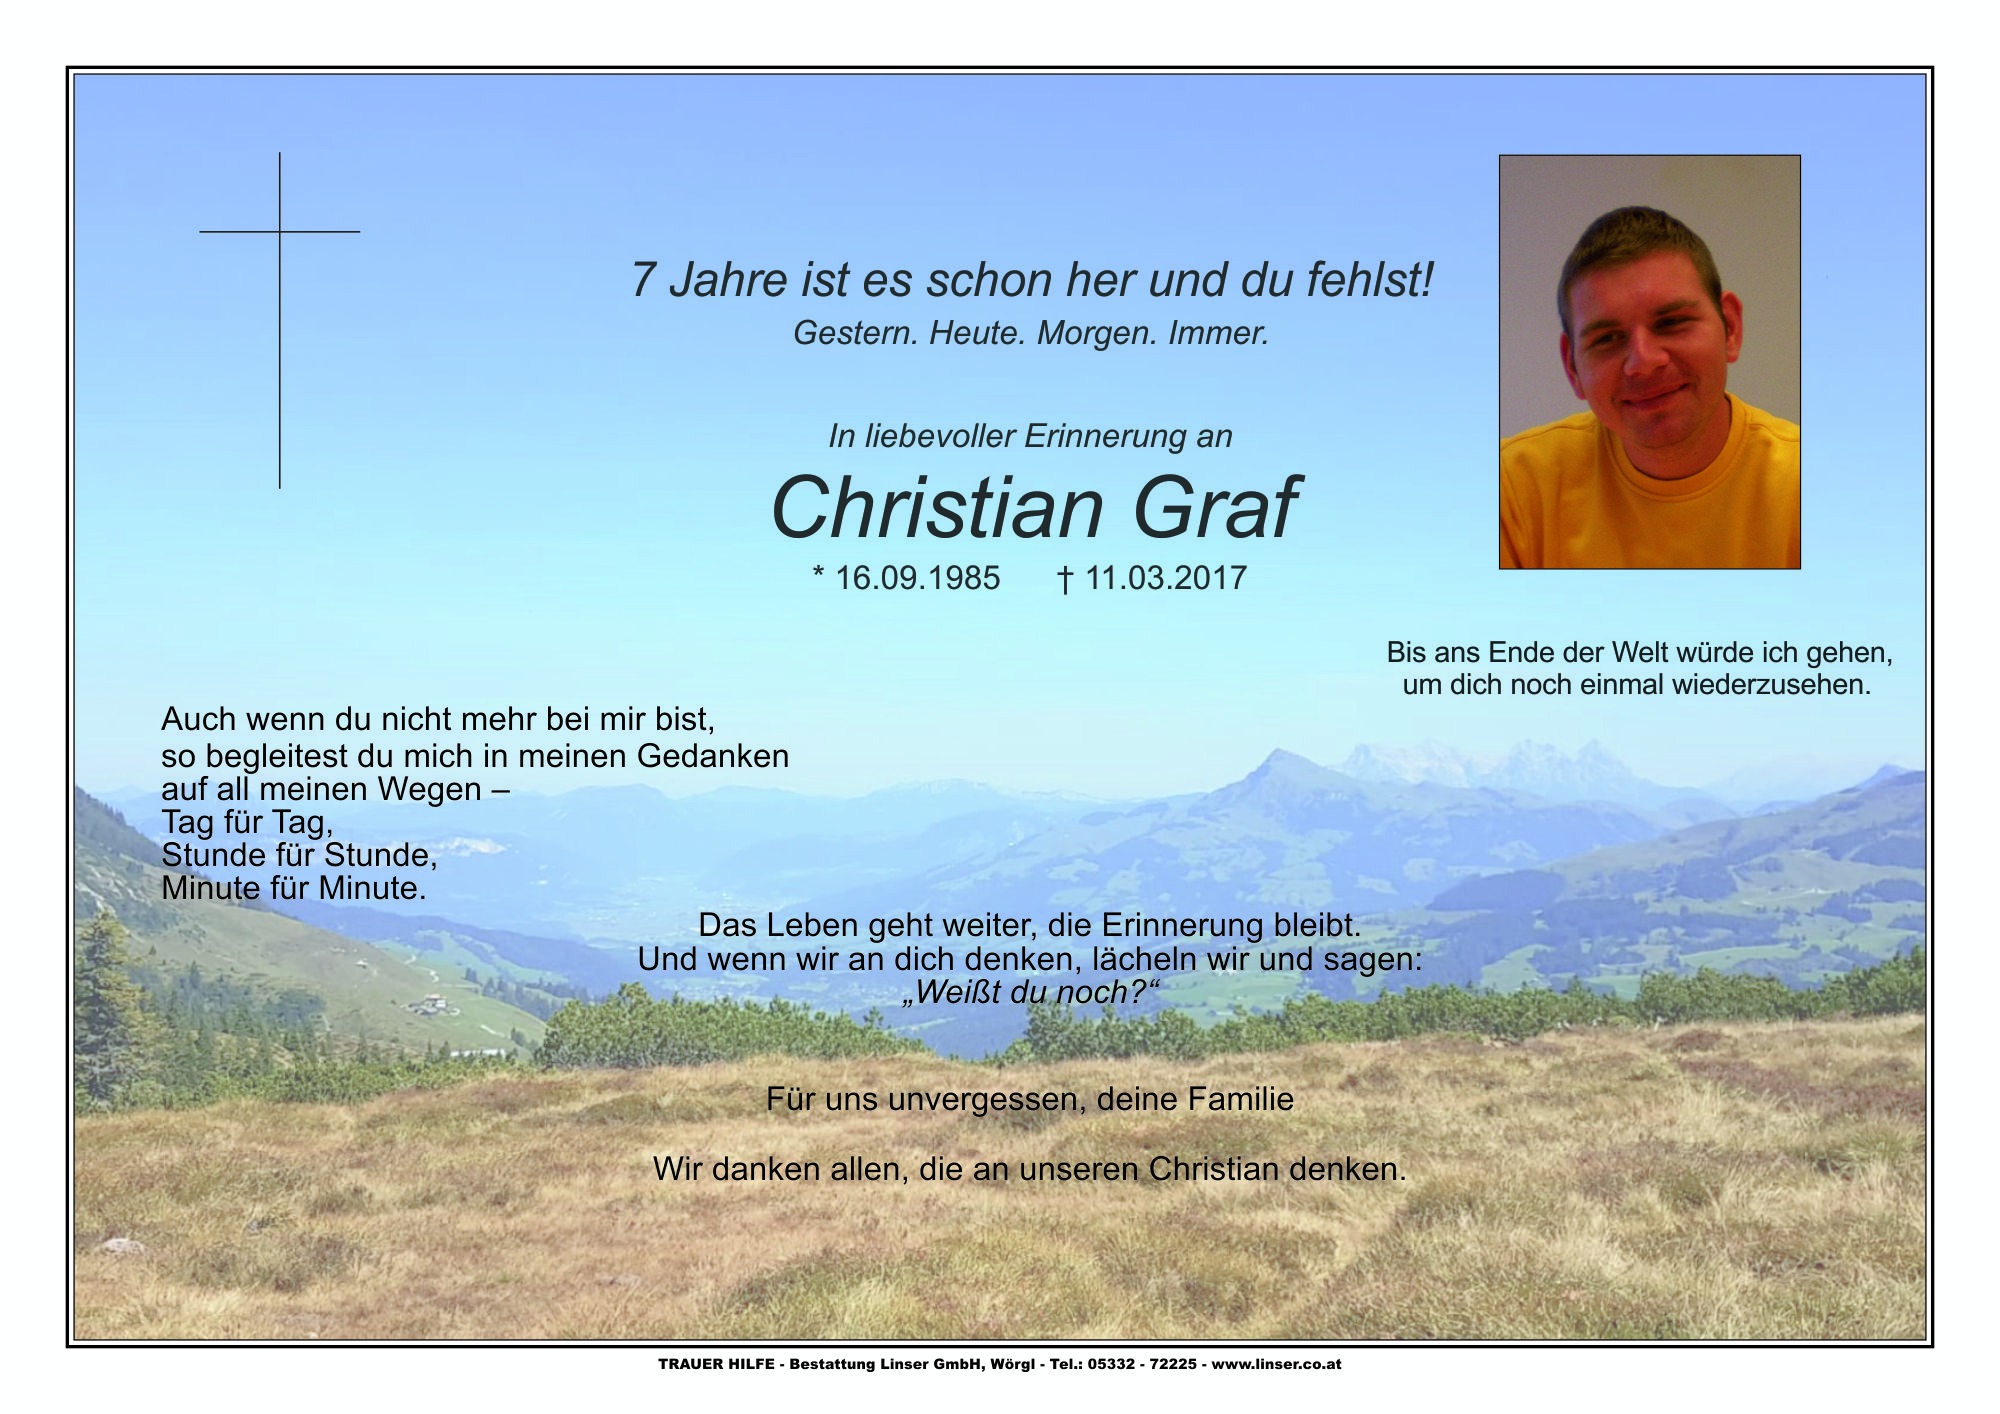 Christian Graf